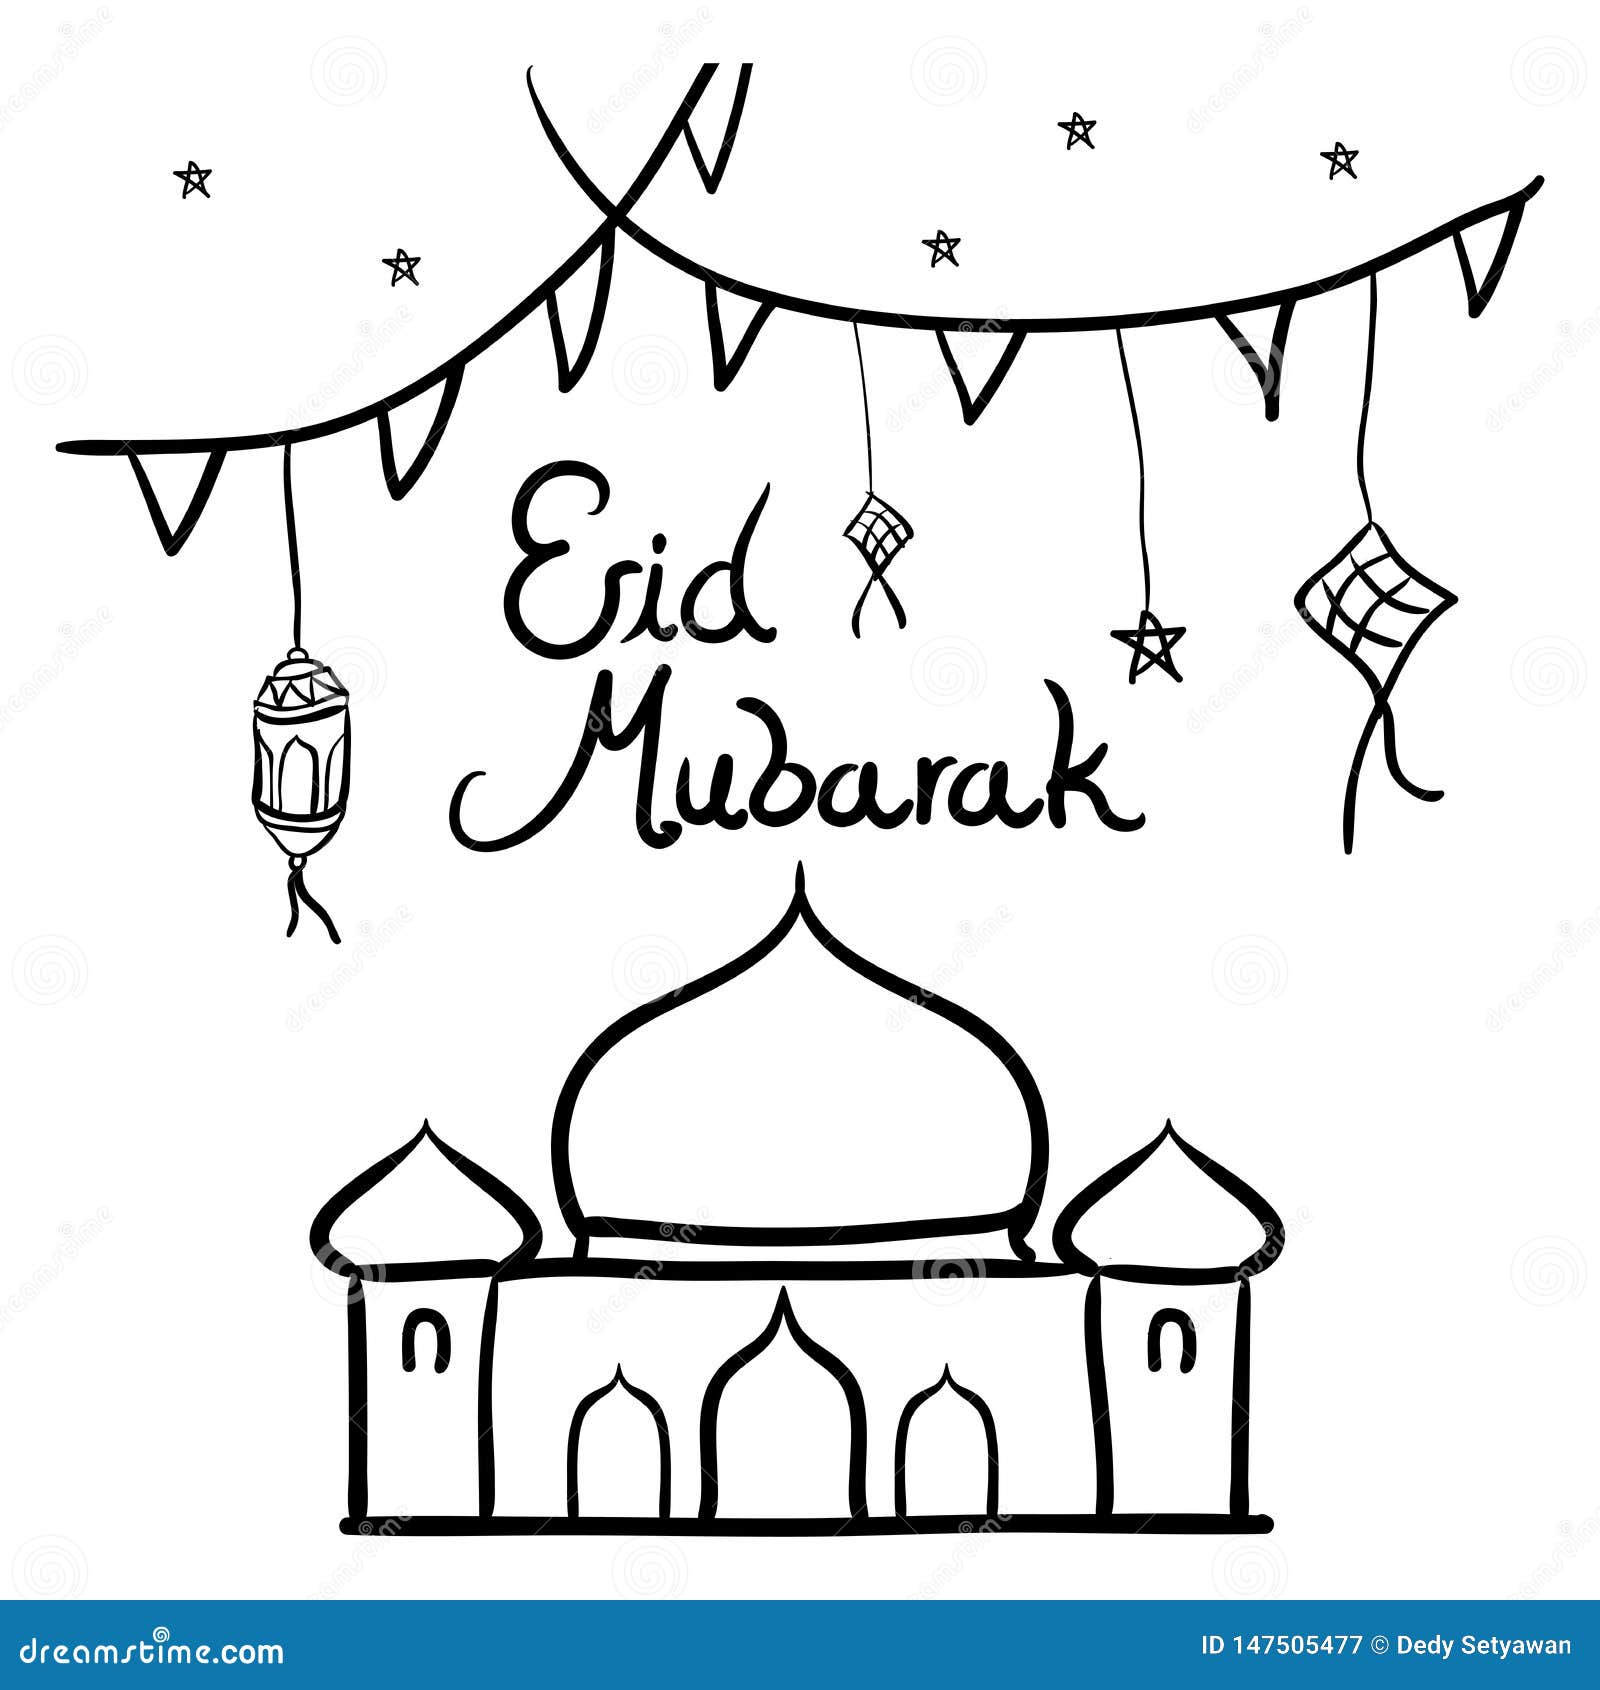 How to draw Eid festival  Eid Mubarak drawing ll Ramadan Special drawing  httpswwwyoutubecomchannelUCCoJxBJrVKeo3zaxv5Su7xA  By Tanu Art  Academy  Facebook